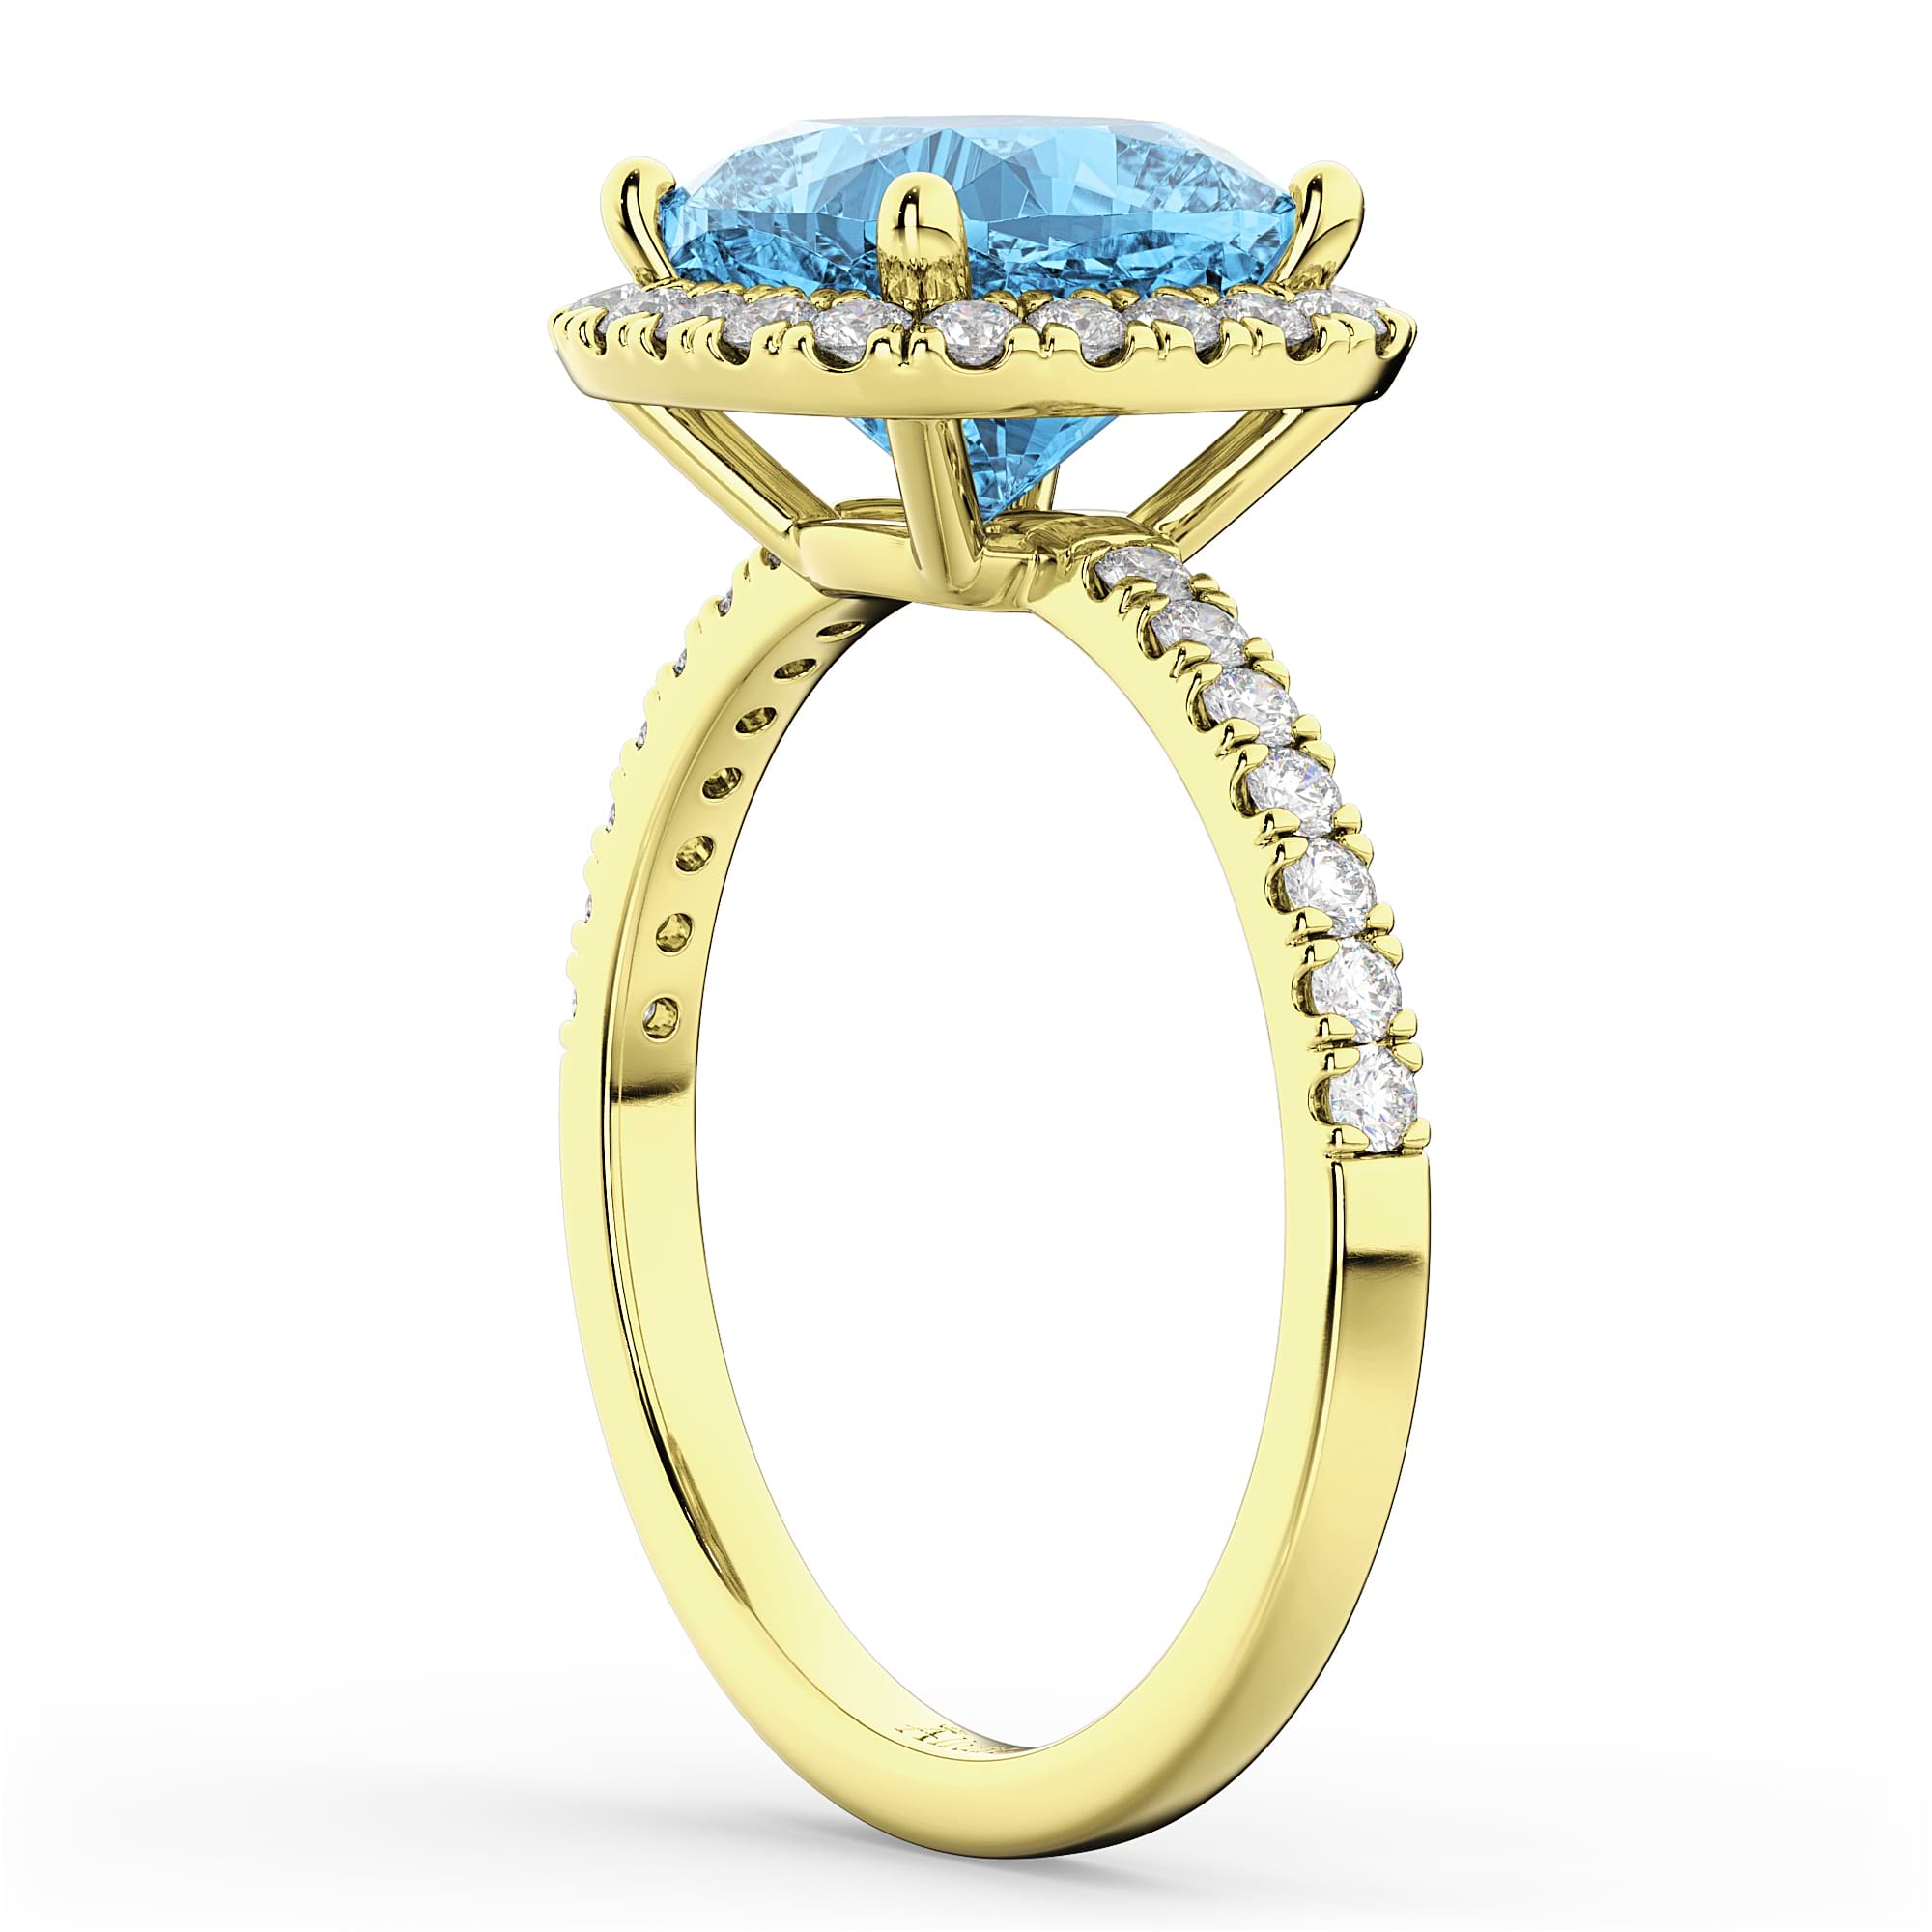 Cushion Cut Halo Blue Topaz & Diamond Engagement Ring 14k Yellow Gold (3.11ct)